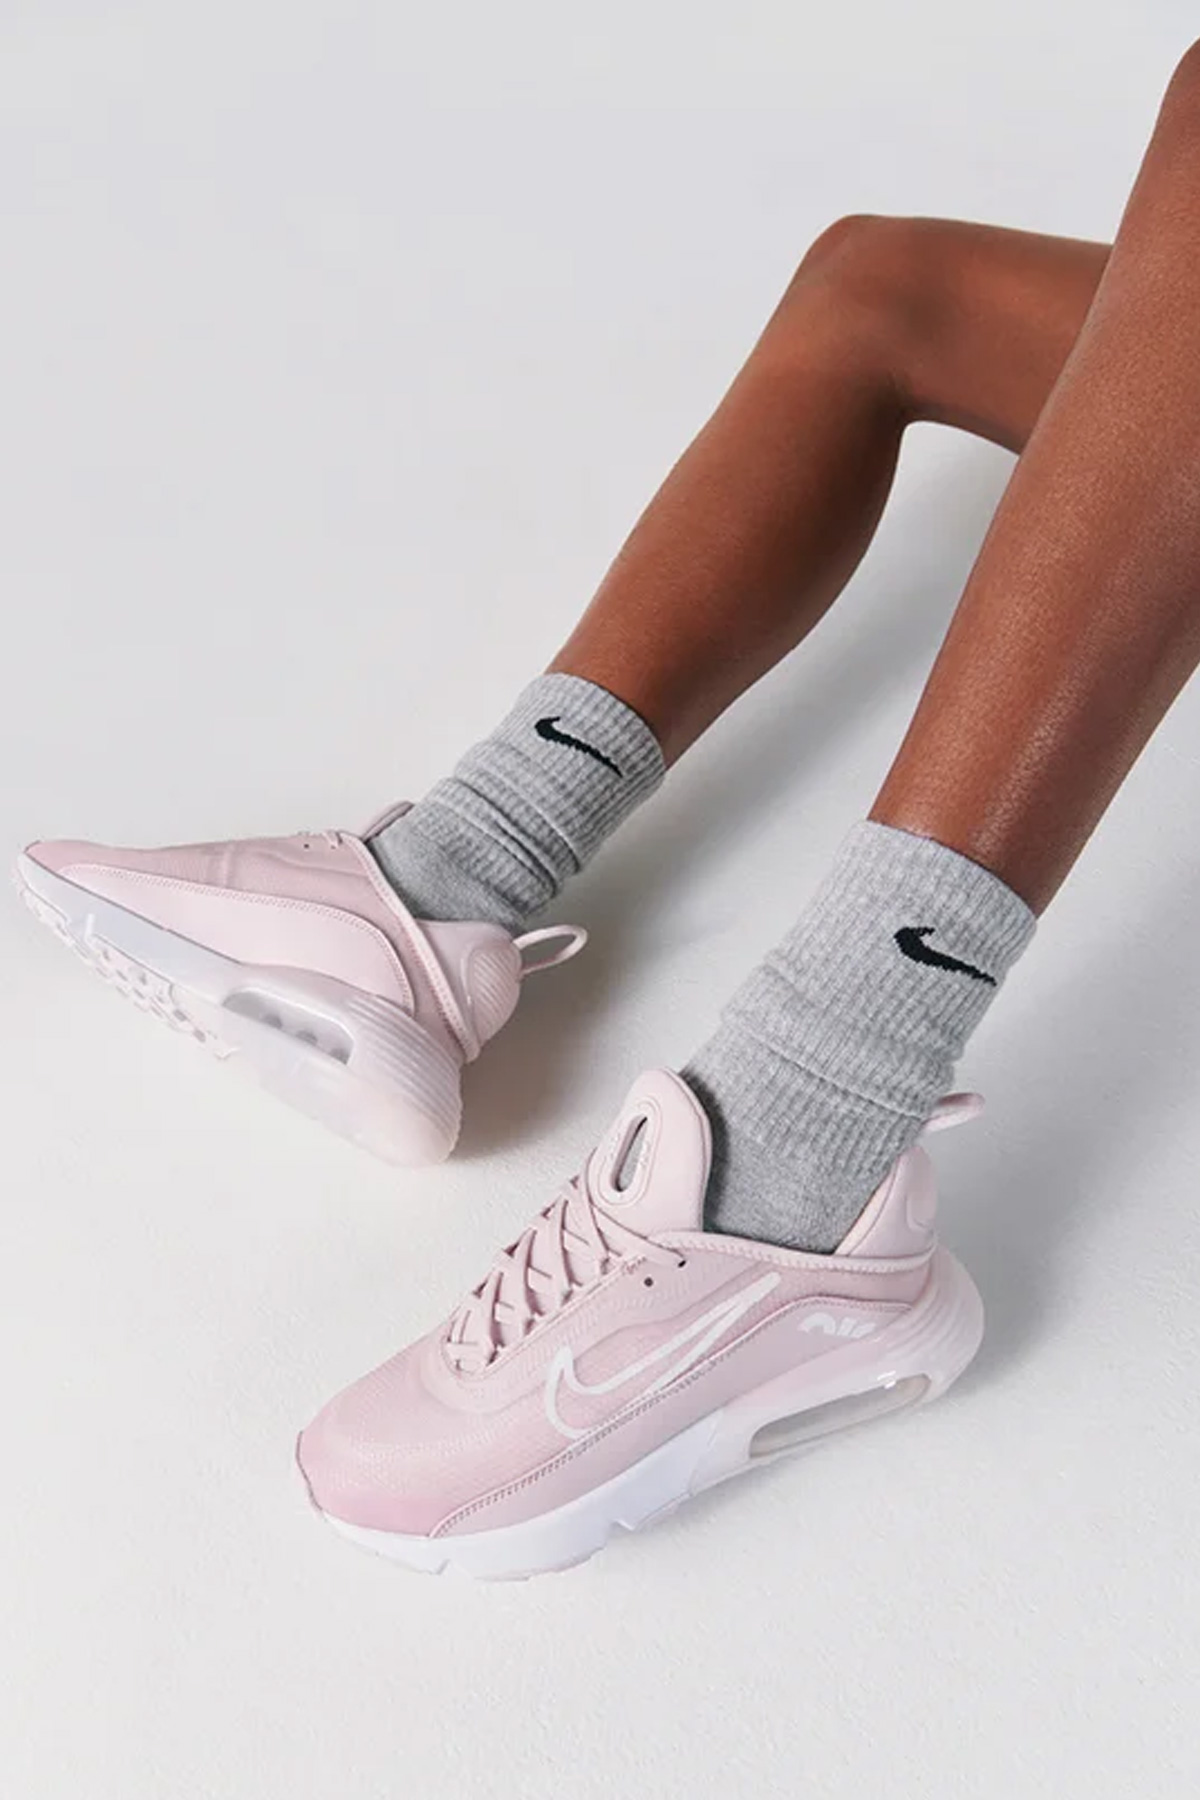 Nike Women's Shoes \u0026 Clothing | Stylerunner